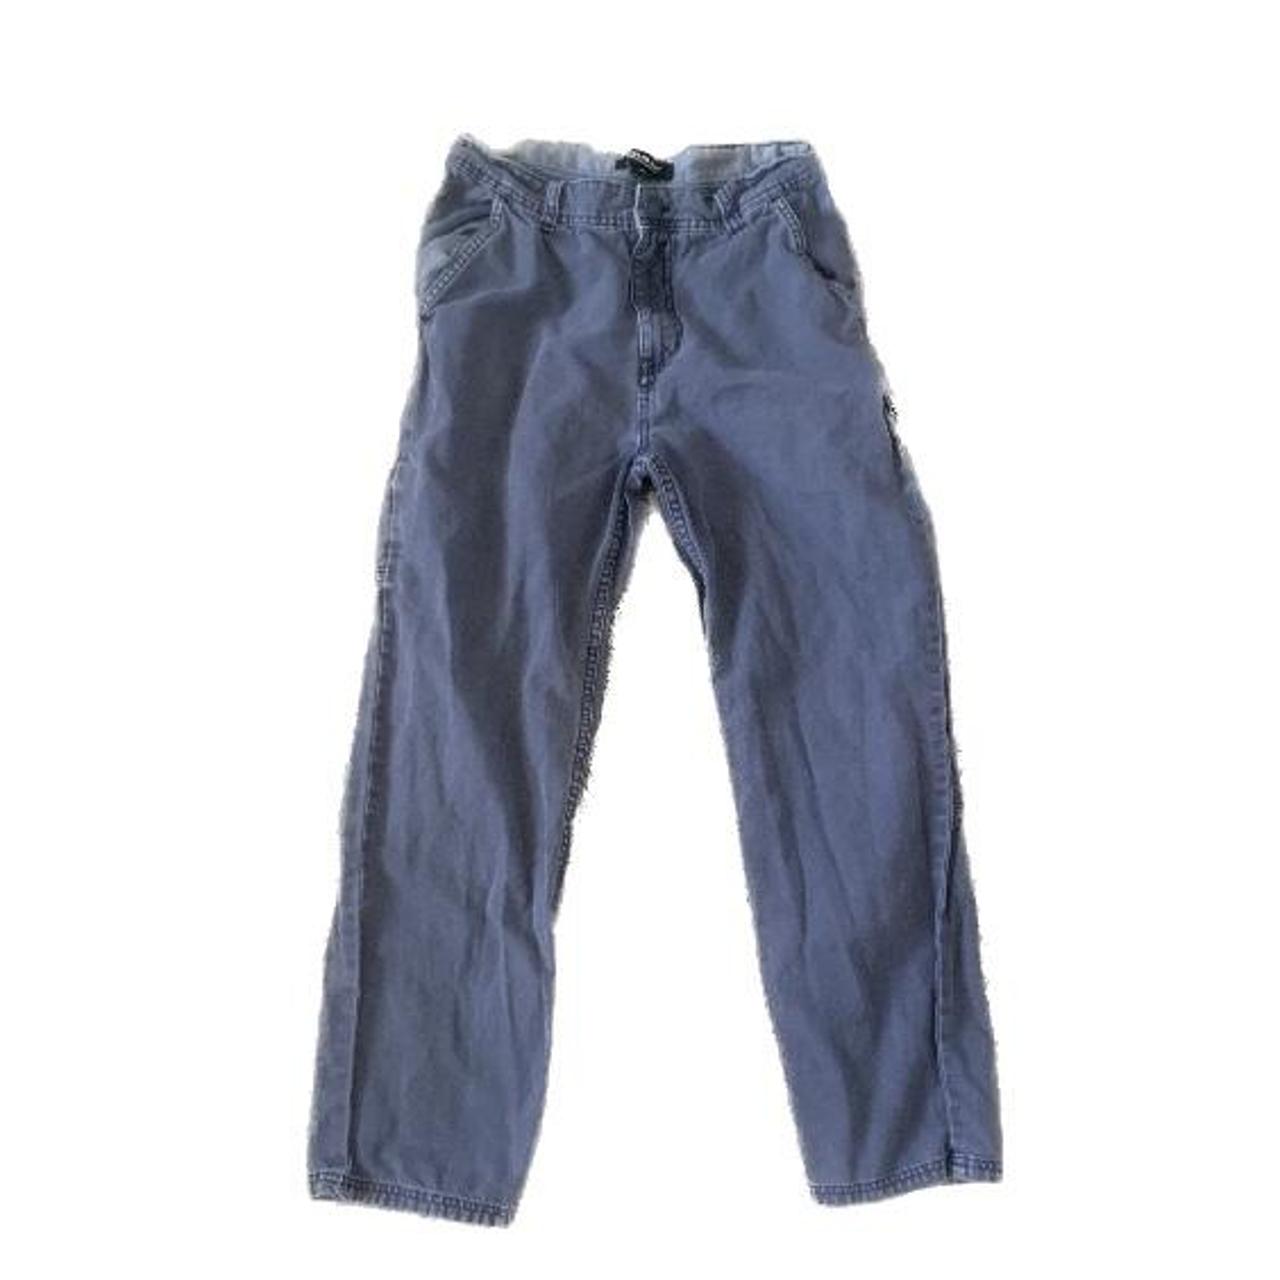 Dark blue cargo loose fit Cotton On pants, Slightly... - Depop